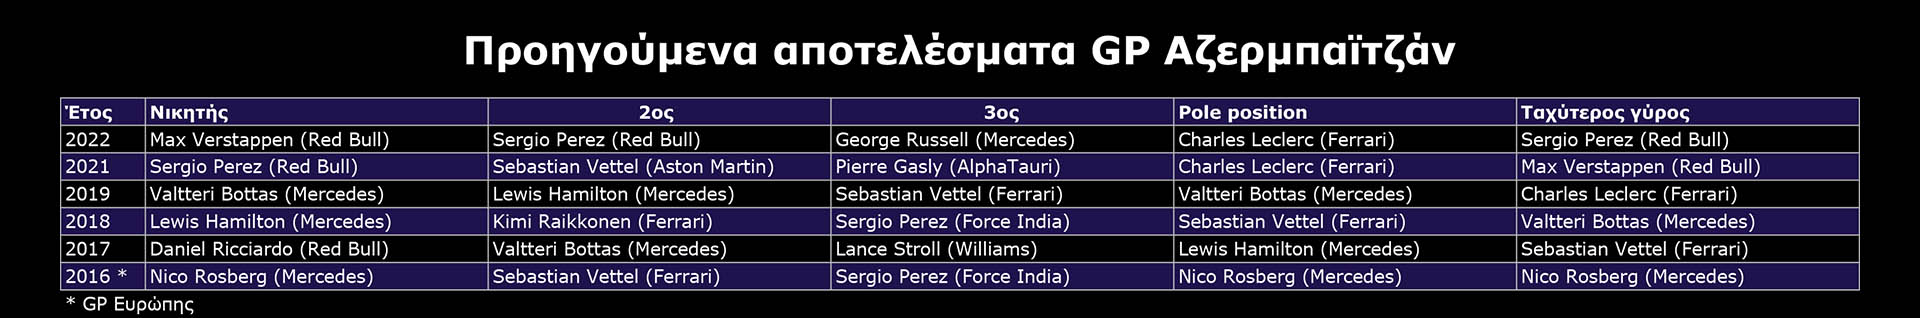 F1 - Προηγούμενα αποτελέσματα GP Αζερμπαϊτζάν